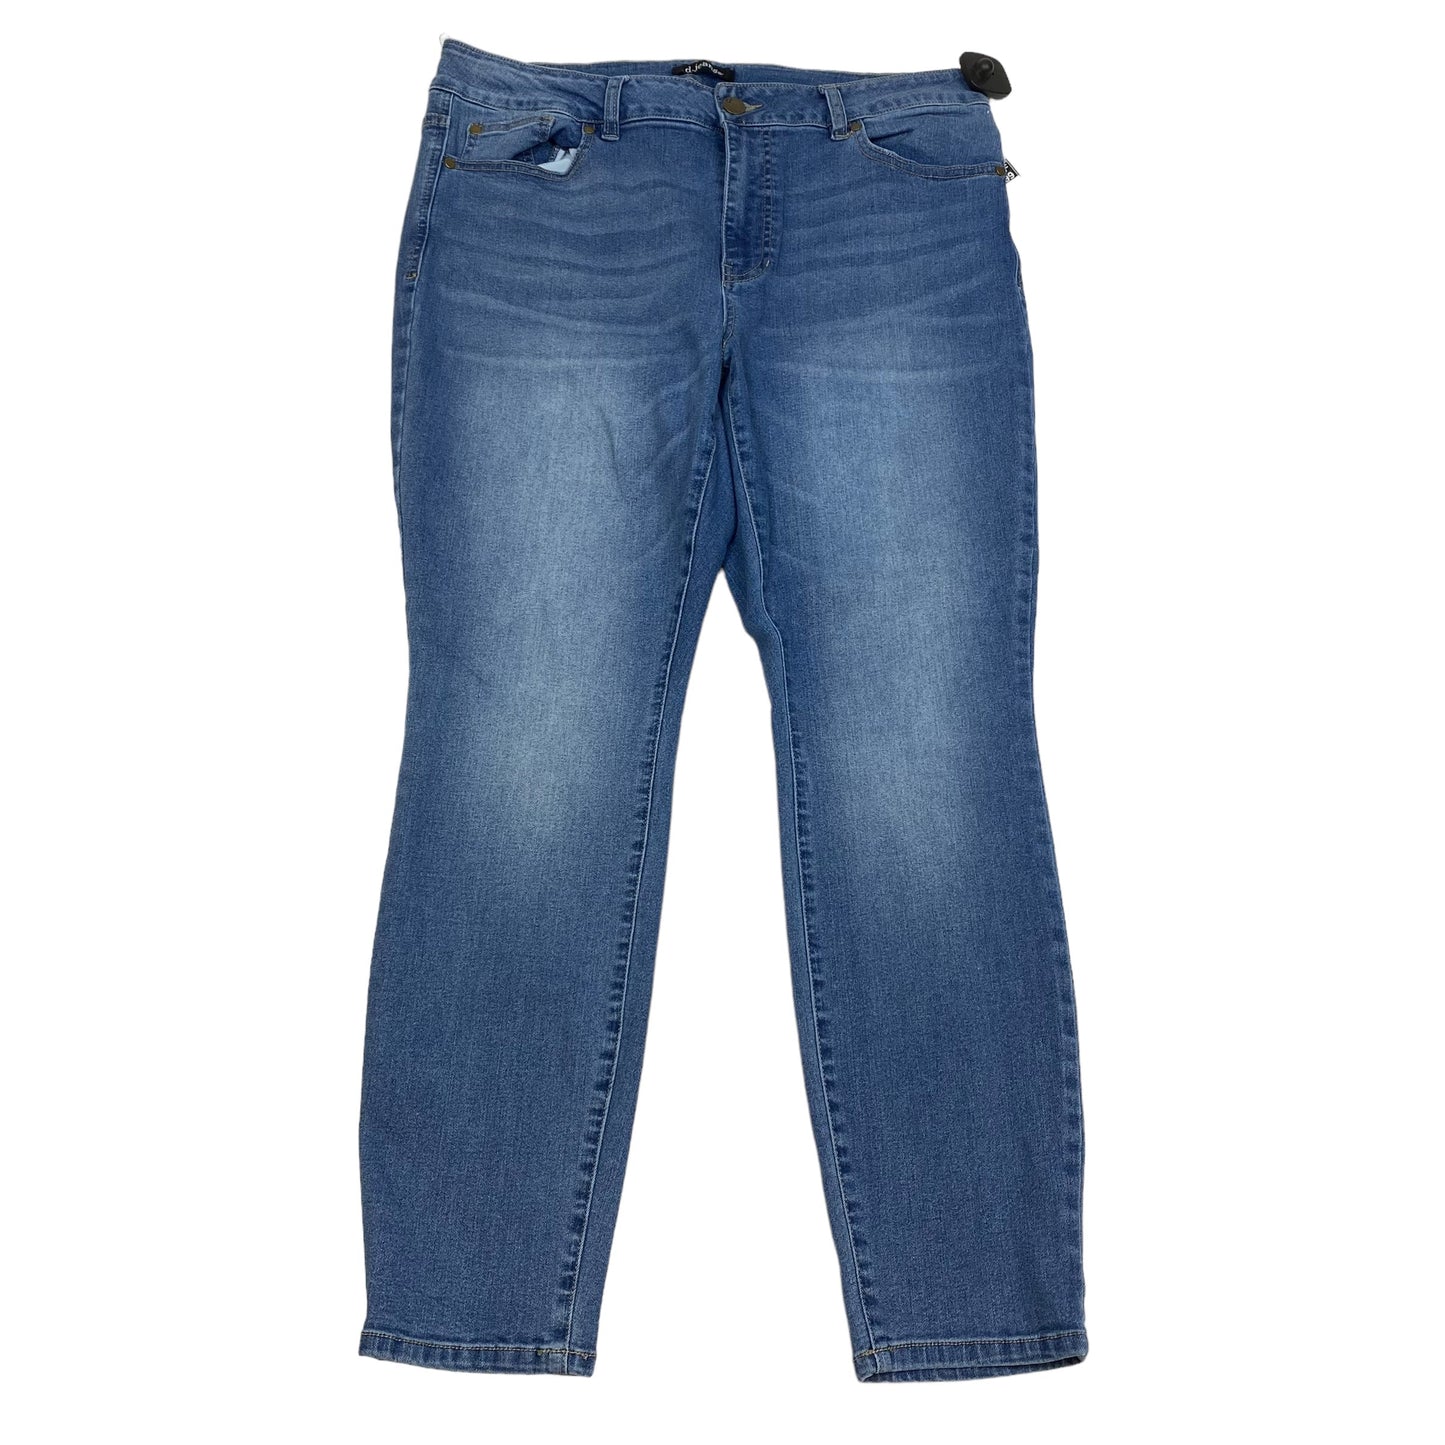 Blue Denim Jeans Skinny D Jeans, Size 18w